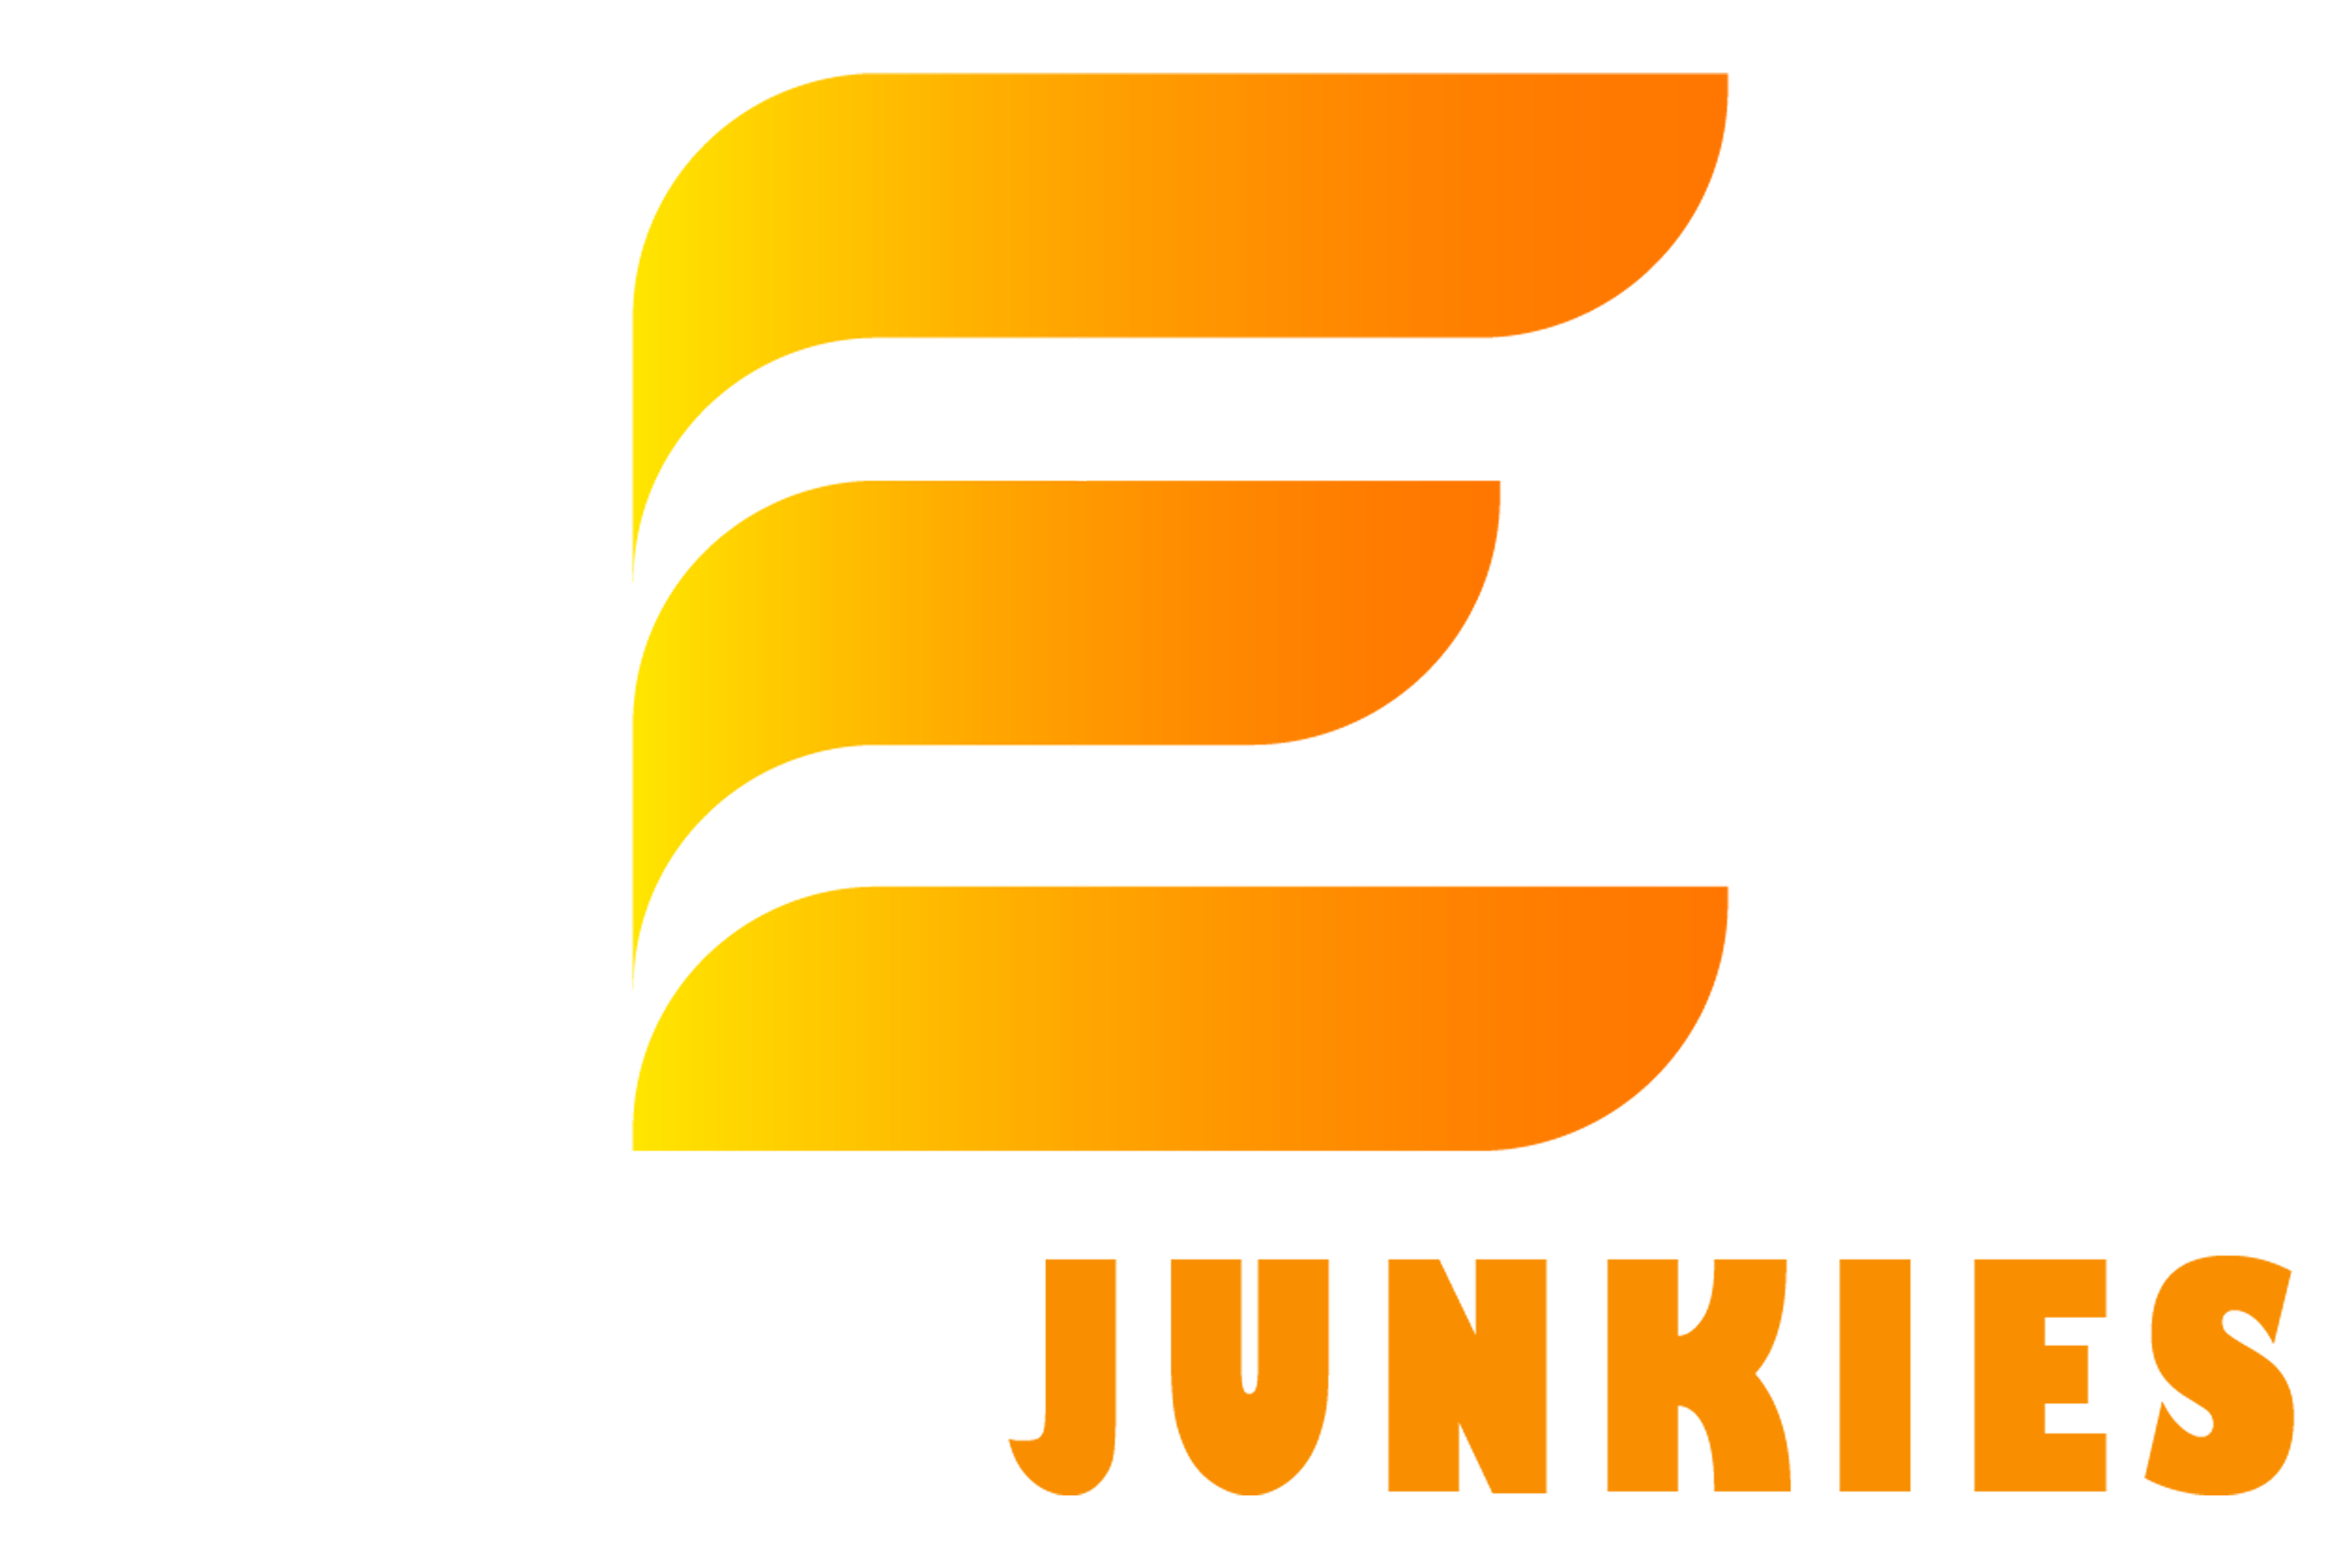 Event Junkies